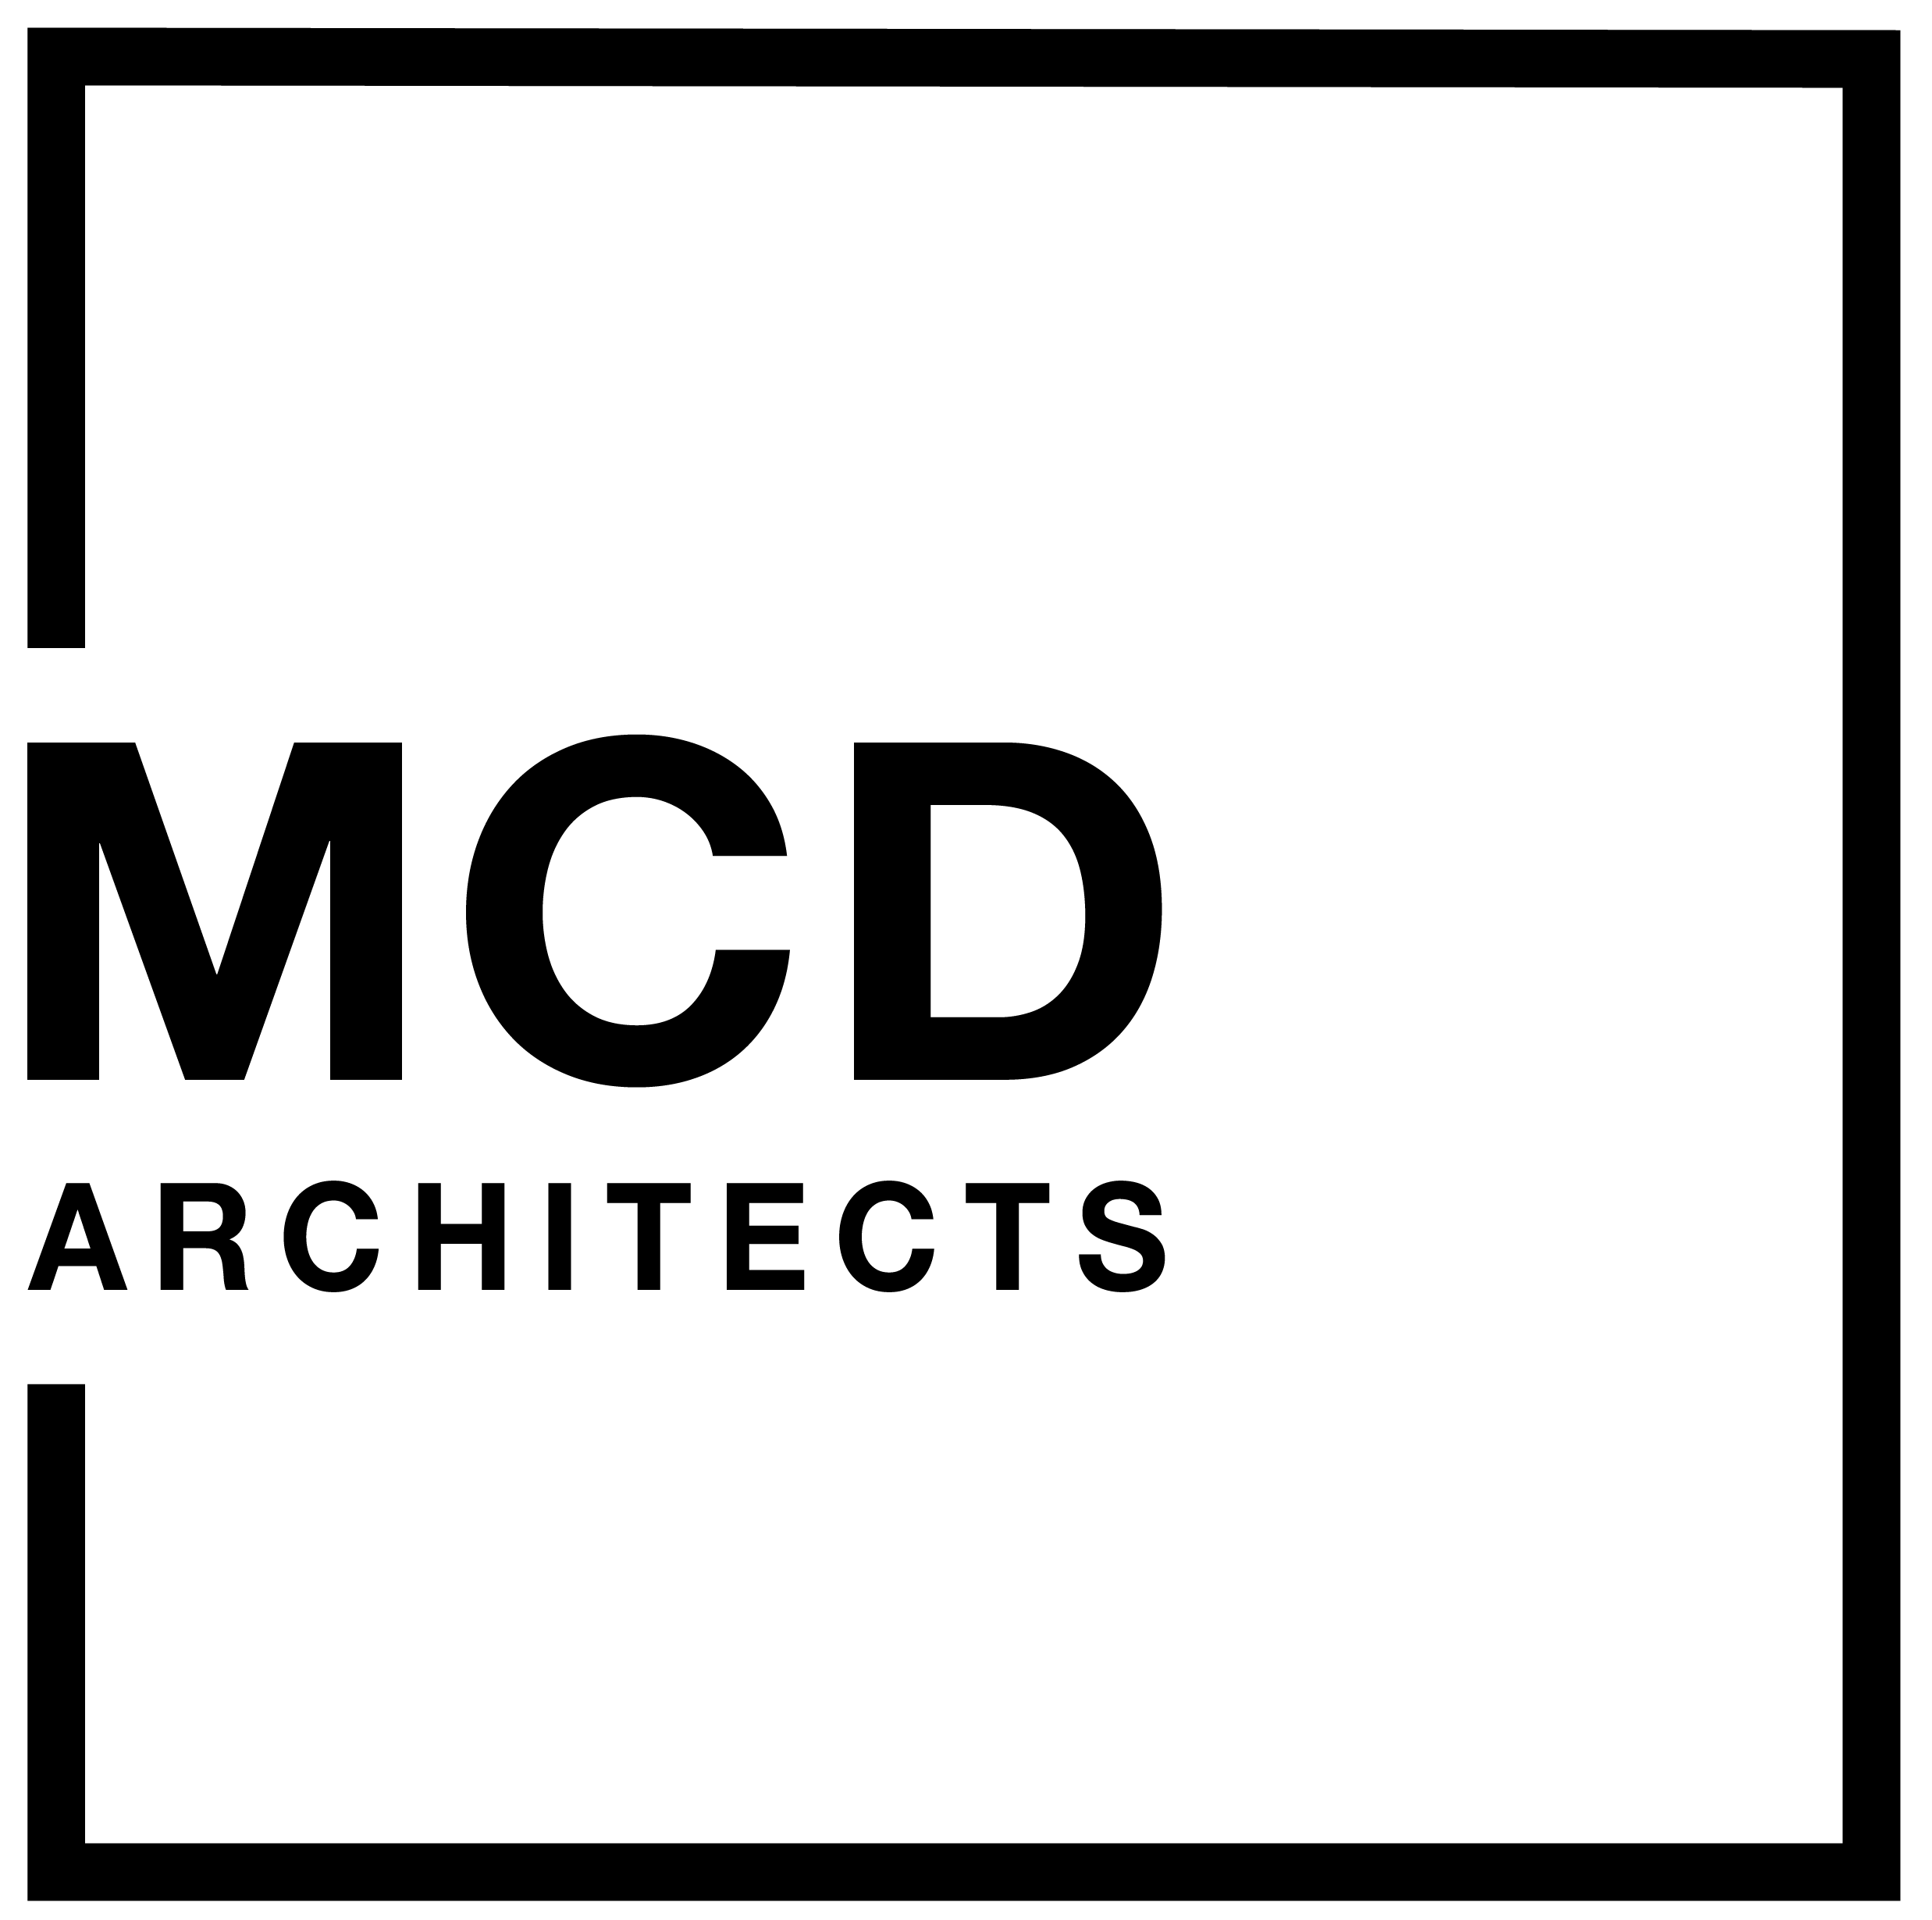 MCD Architects logo